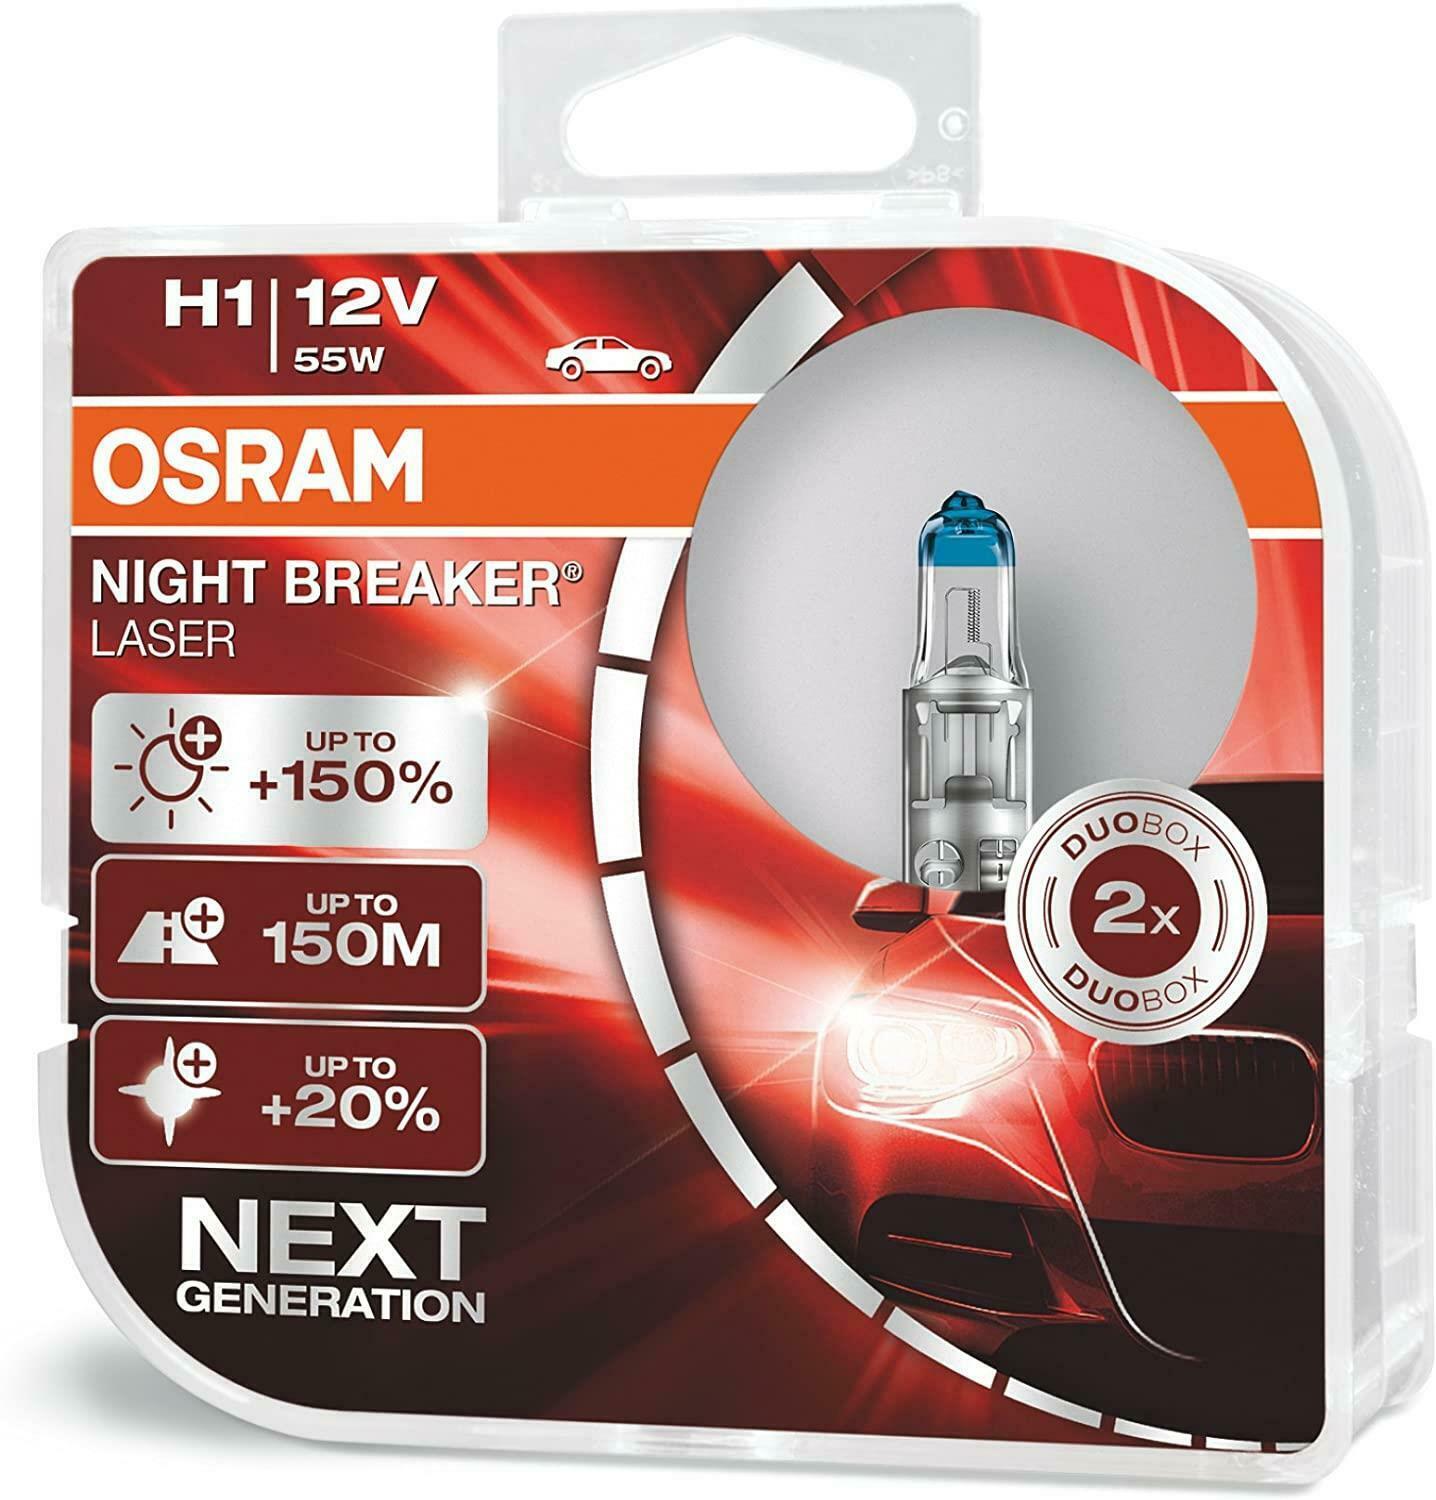 Osram H1 12V 55W Night Breaker Laser (Next Generation) Twin Pack